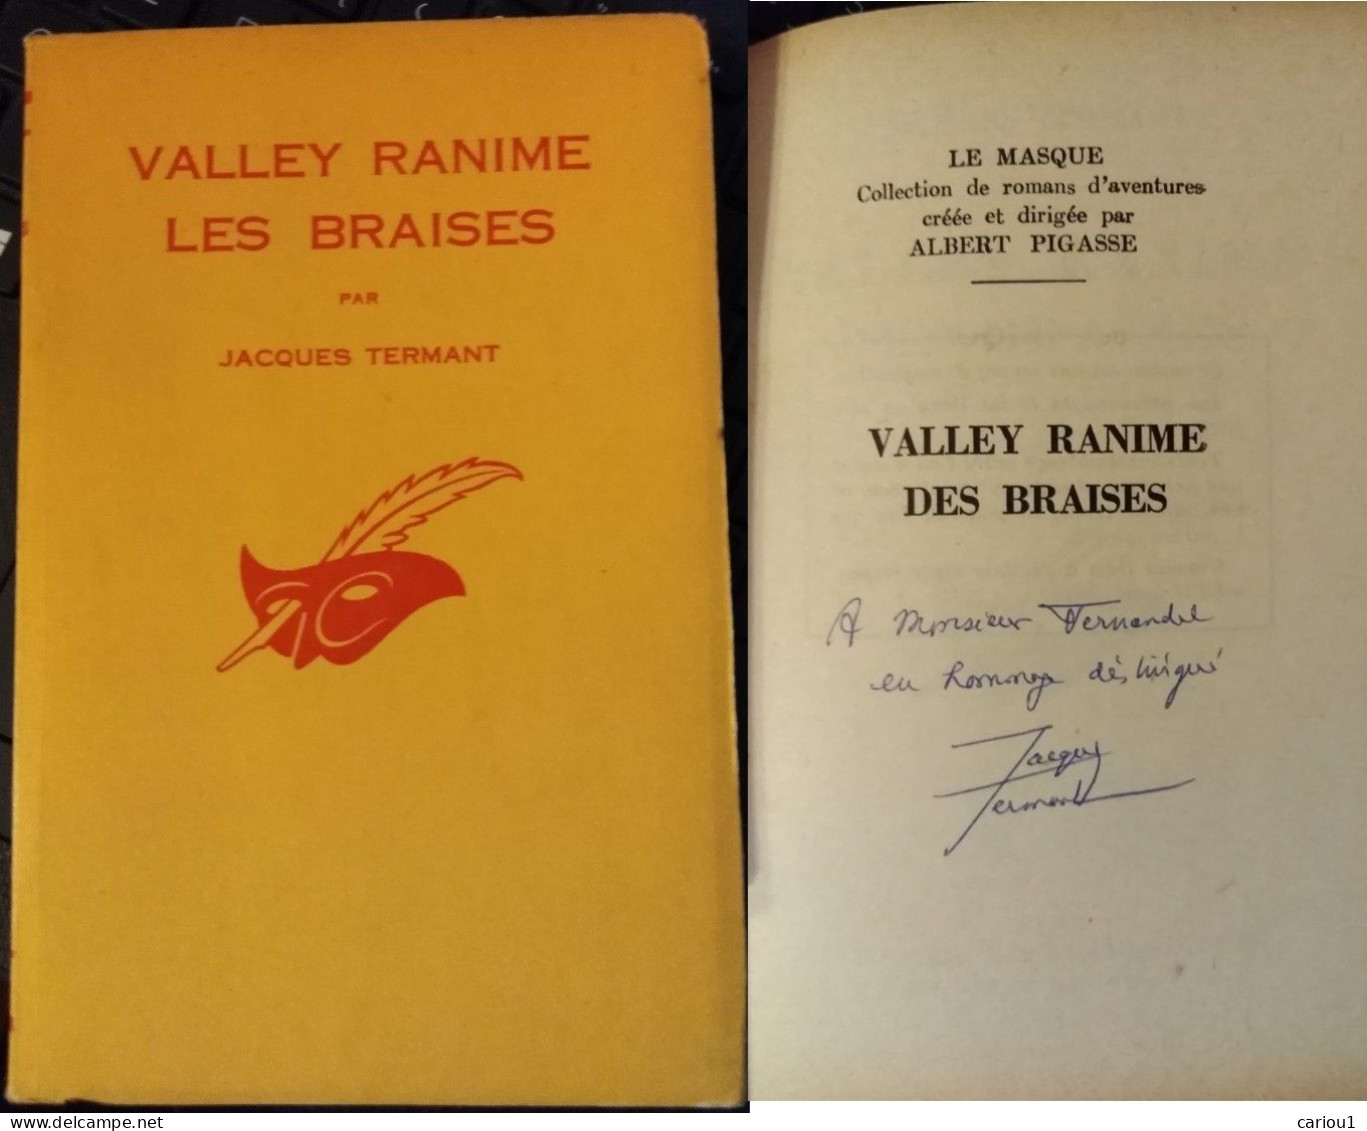 C1 Francois BALSAN Termant VALLEY RANIME LES BRAISES 1962 Envoi DEDICACE SIGNED Port Inclus France - Libri Con Dedica